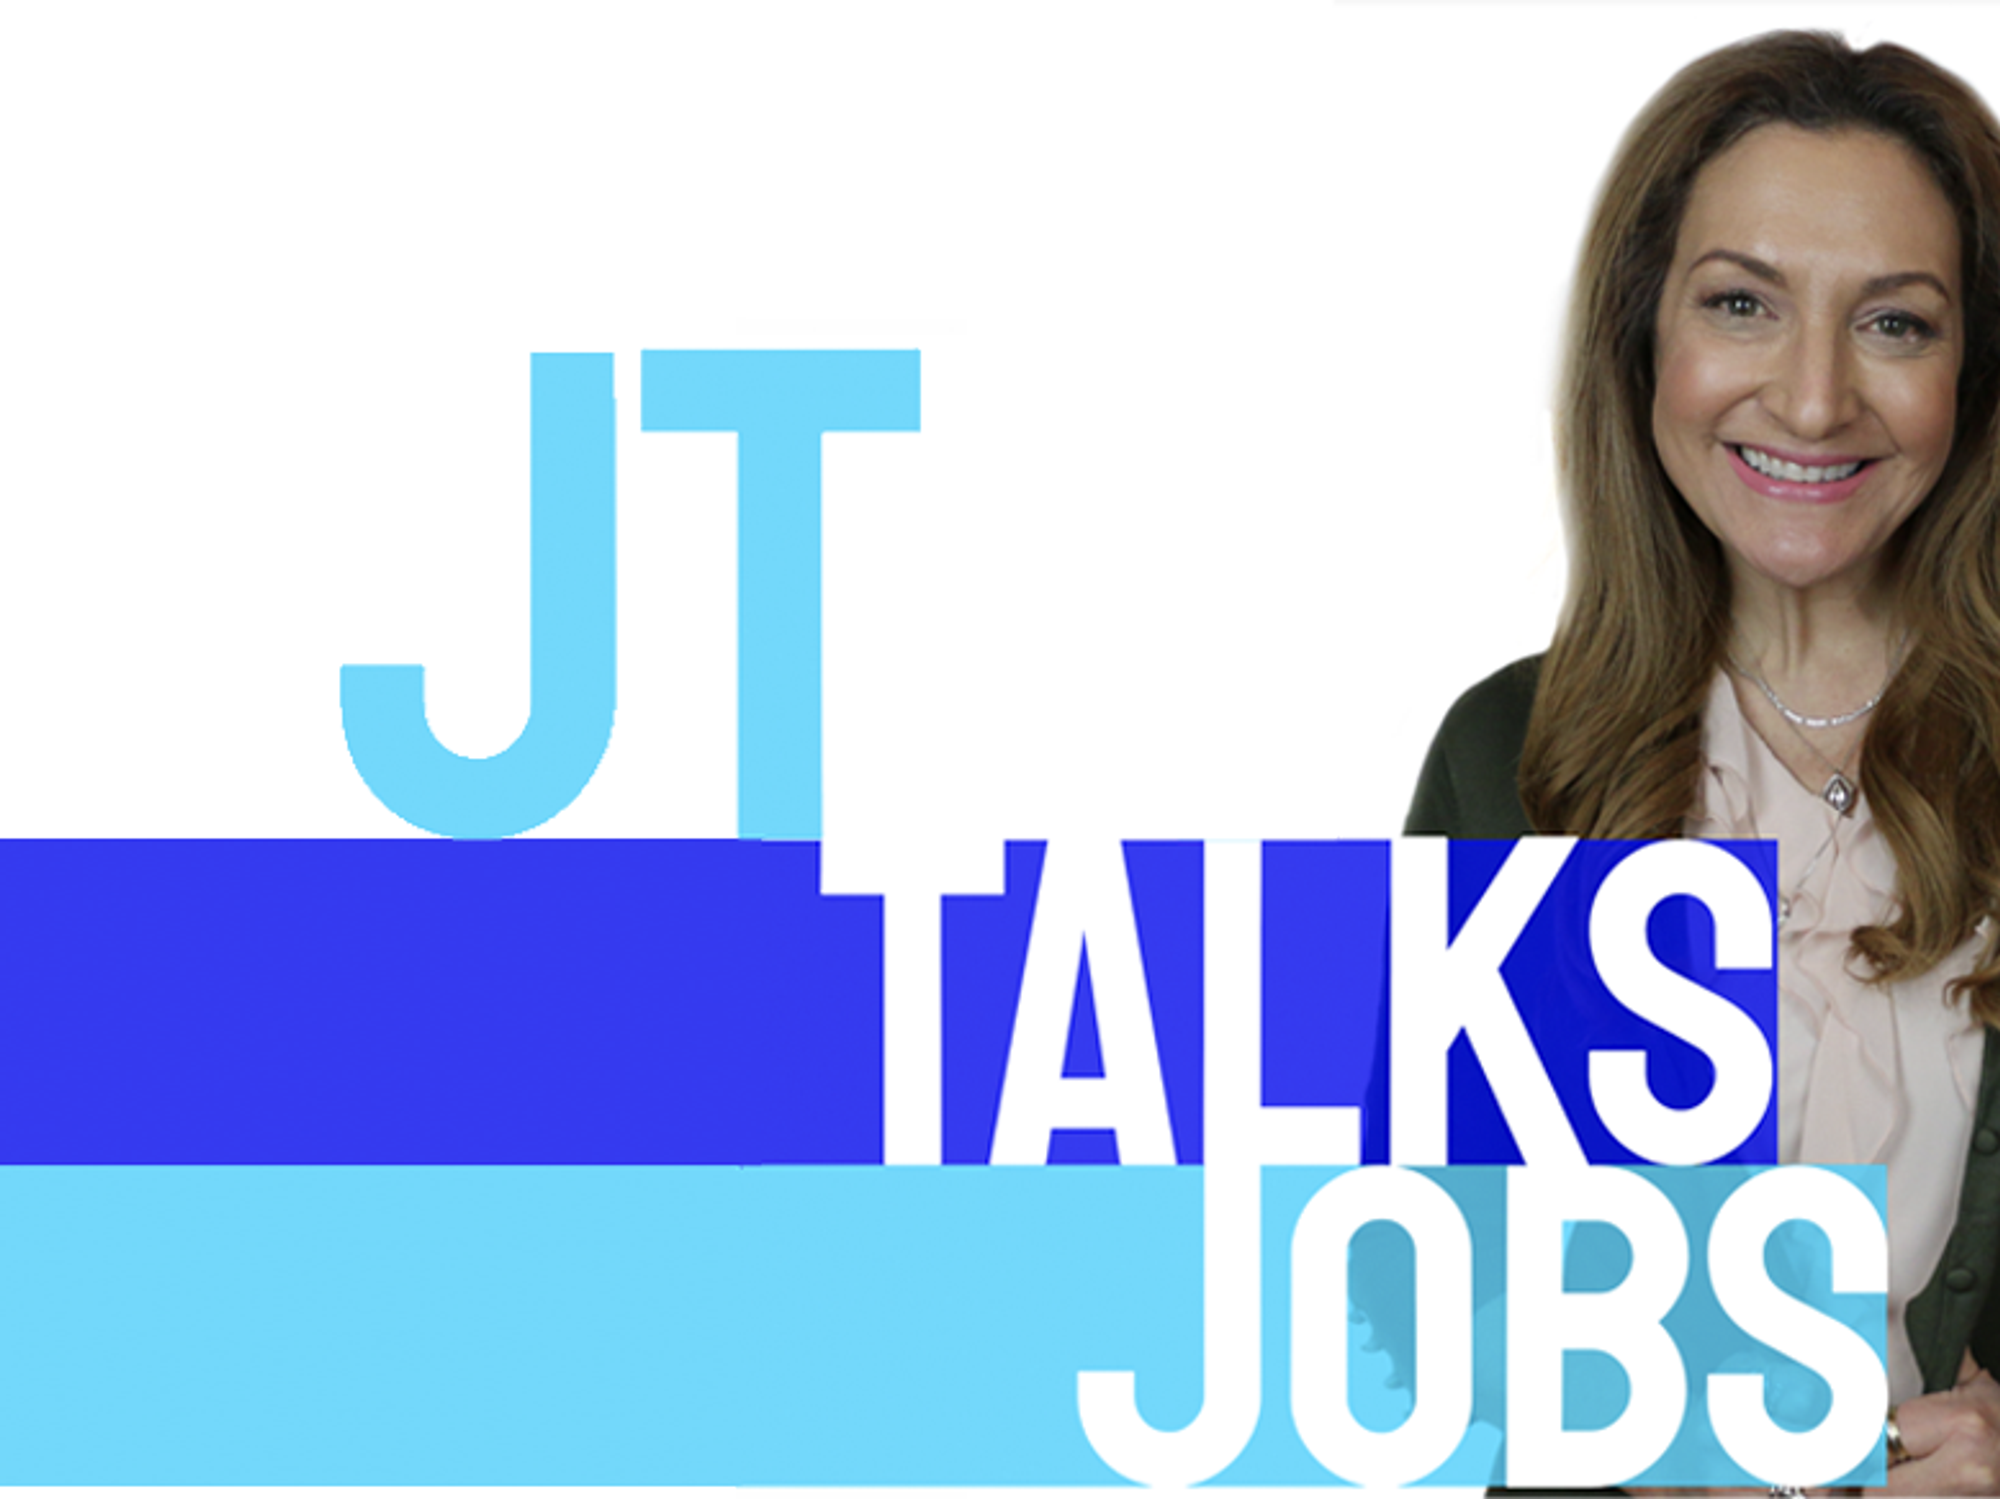 J.T. Talks Jobs - #1 Career Podcast